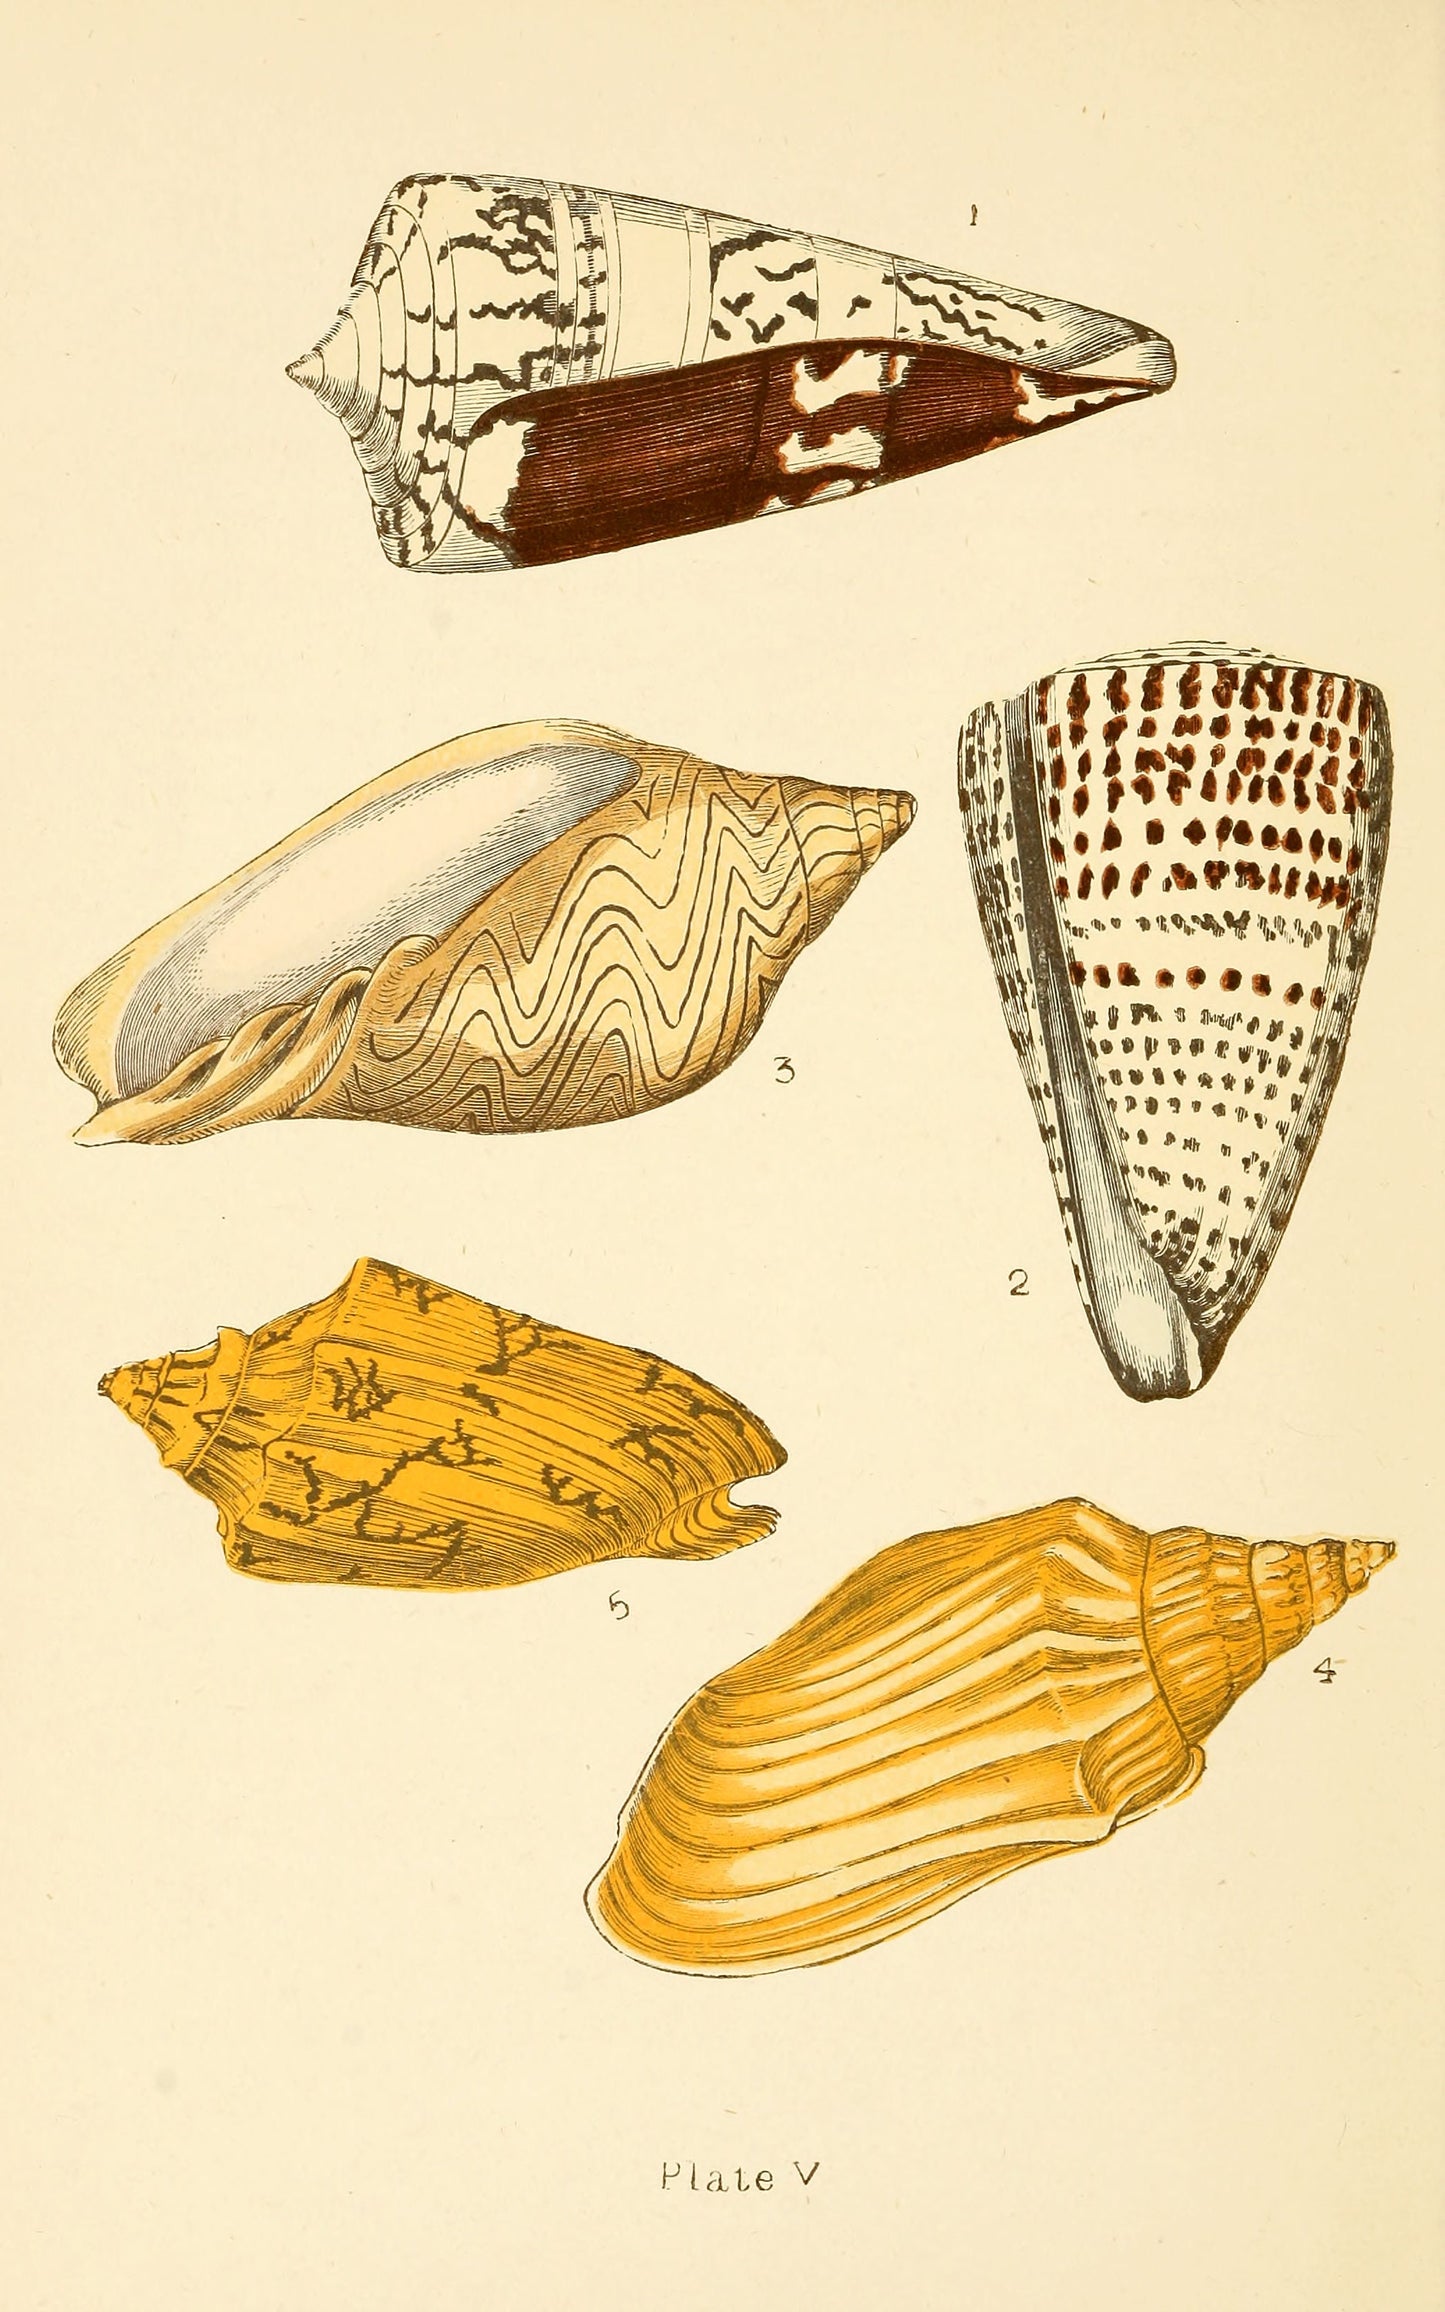 Beautiful Shells [8 Images]